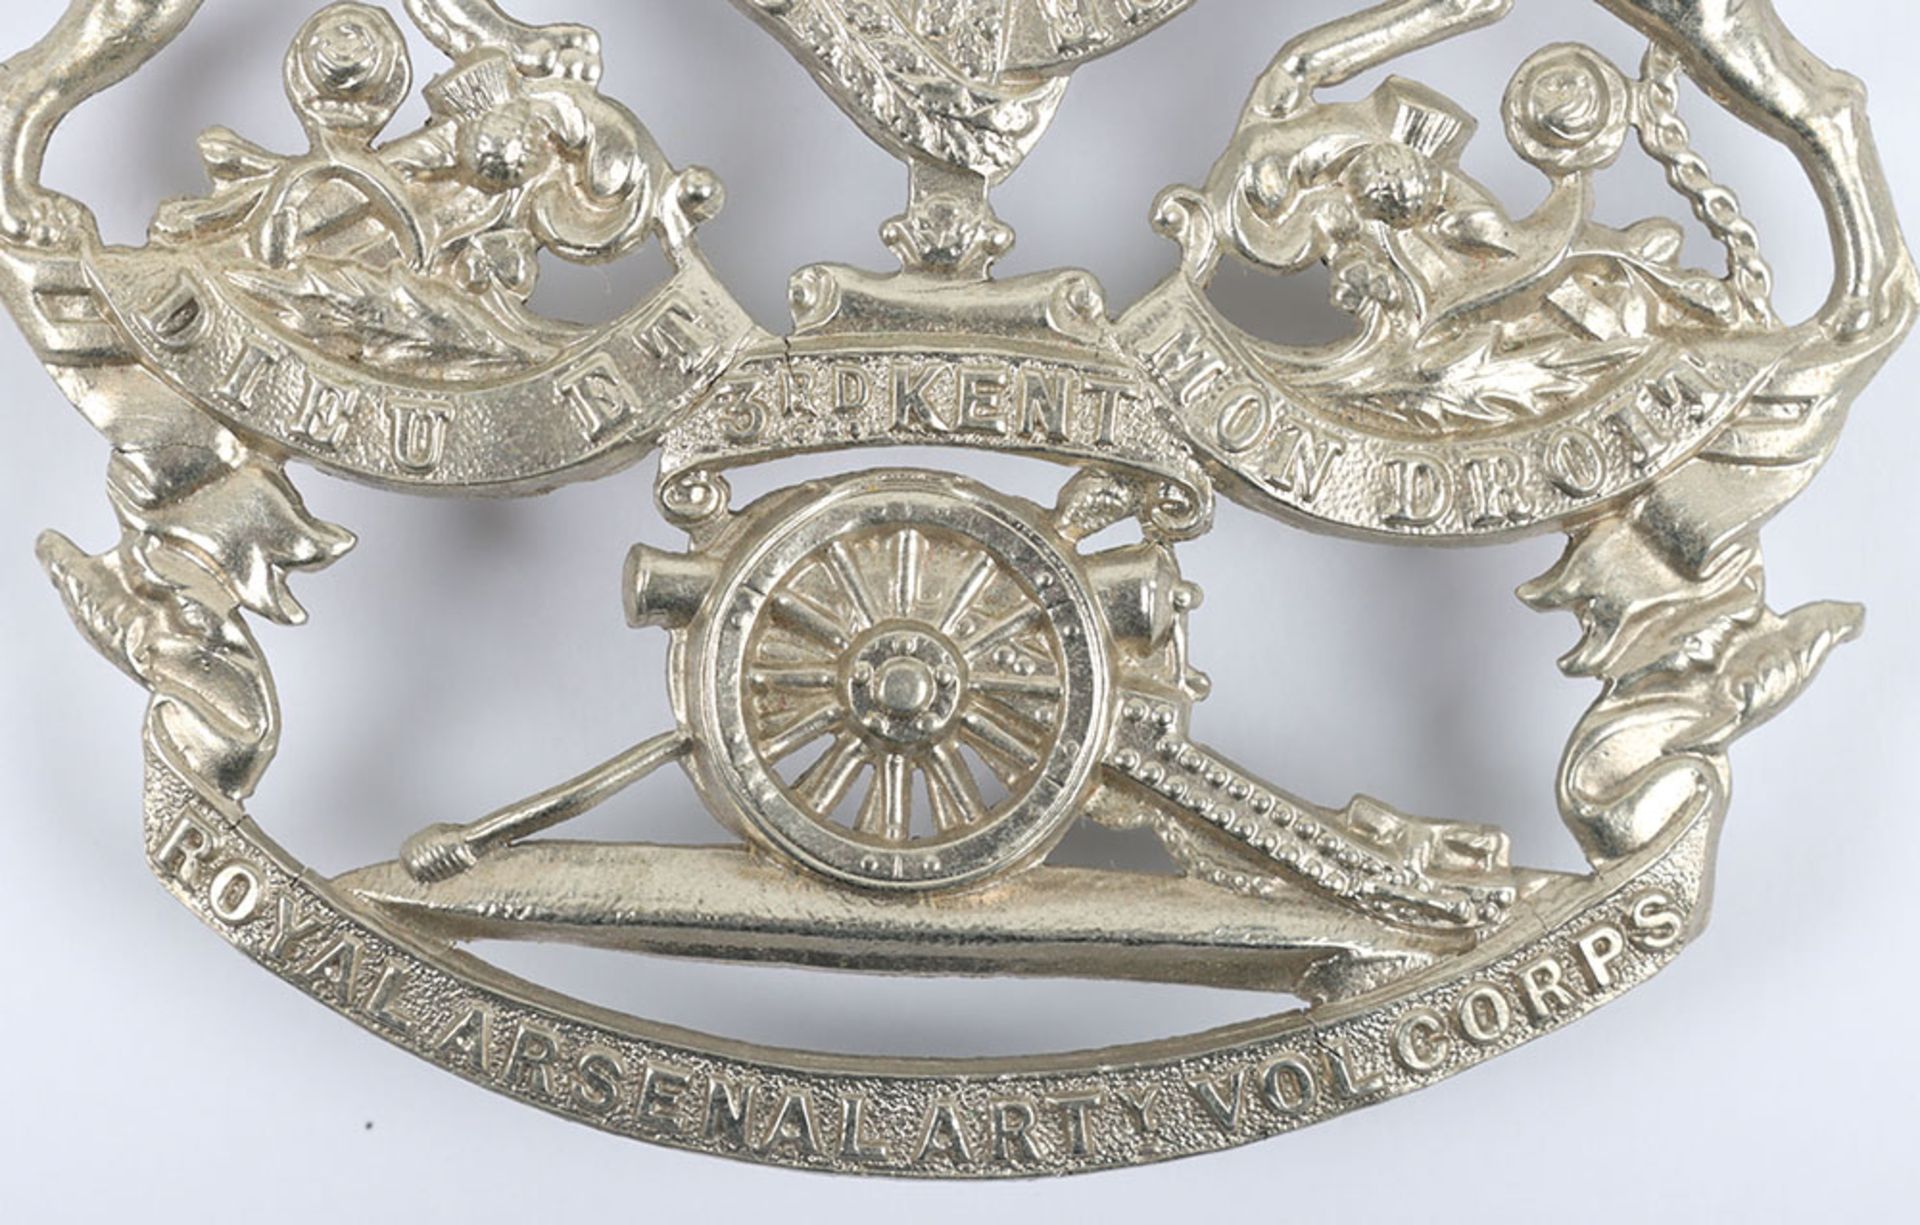 Victorian 3rd Kent Royal Arsenal Artillery Volunteer Corps Home Service Helmet Plate - Image 4 of 6